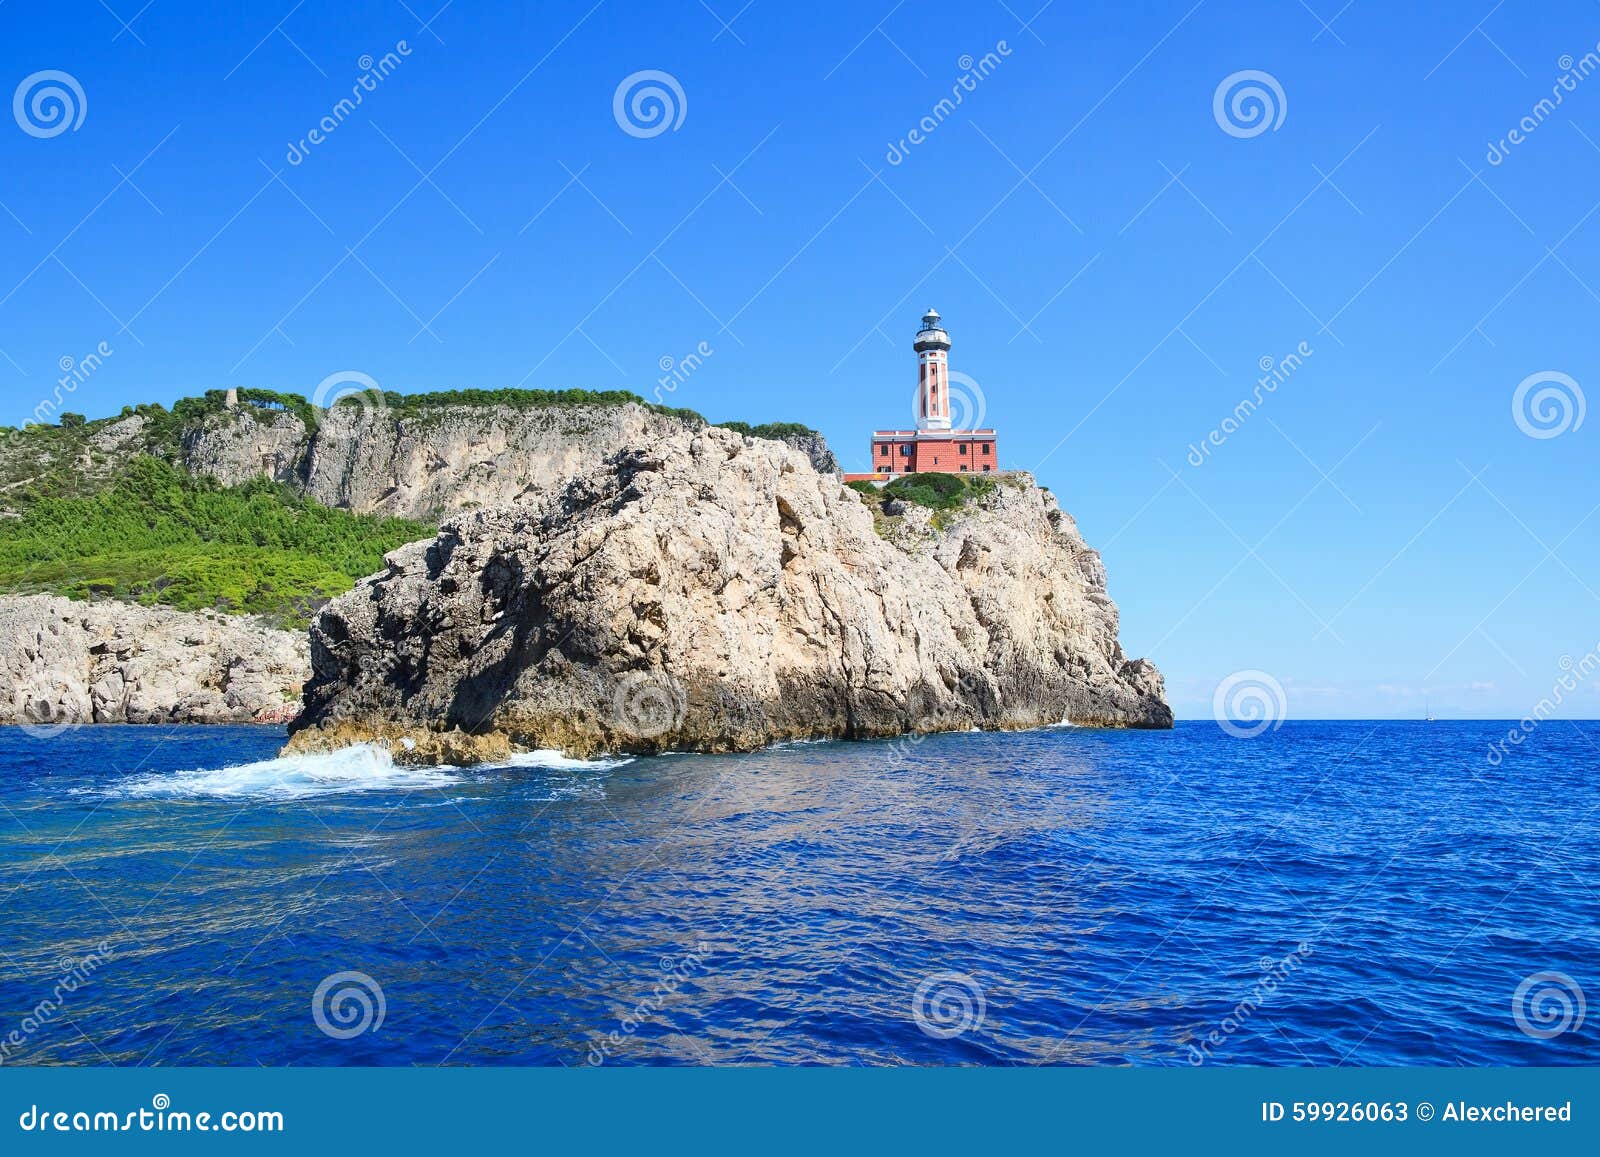 cliff punto carena with lighthouse on coast of tyrrhenian sea, c